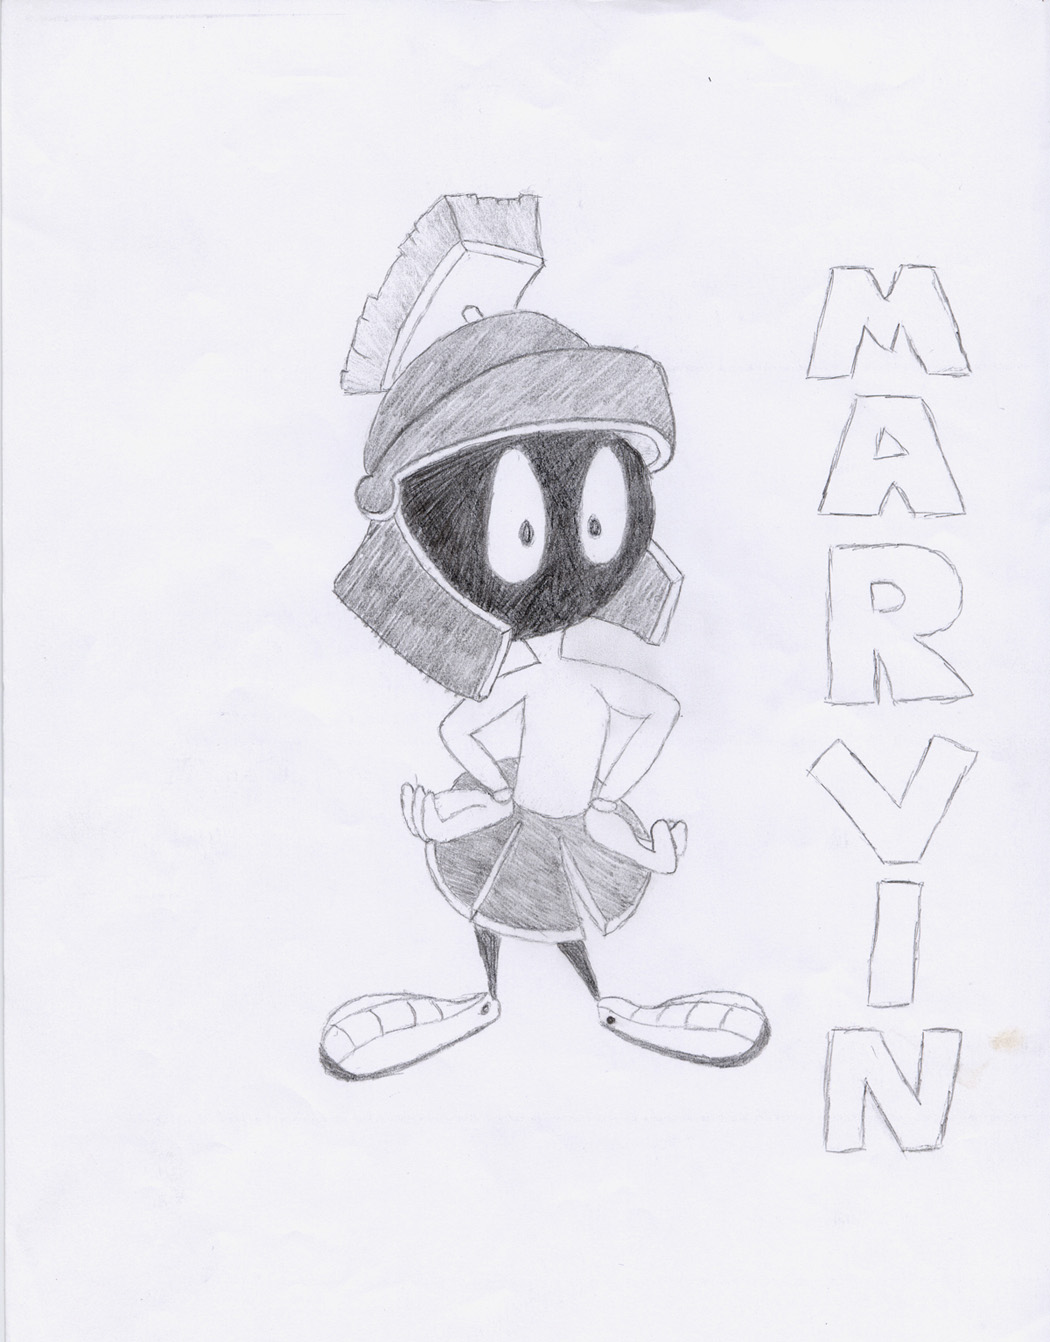 Marvin Martian by ATAtigerfreak